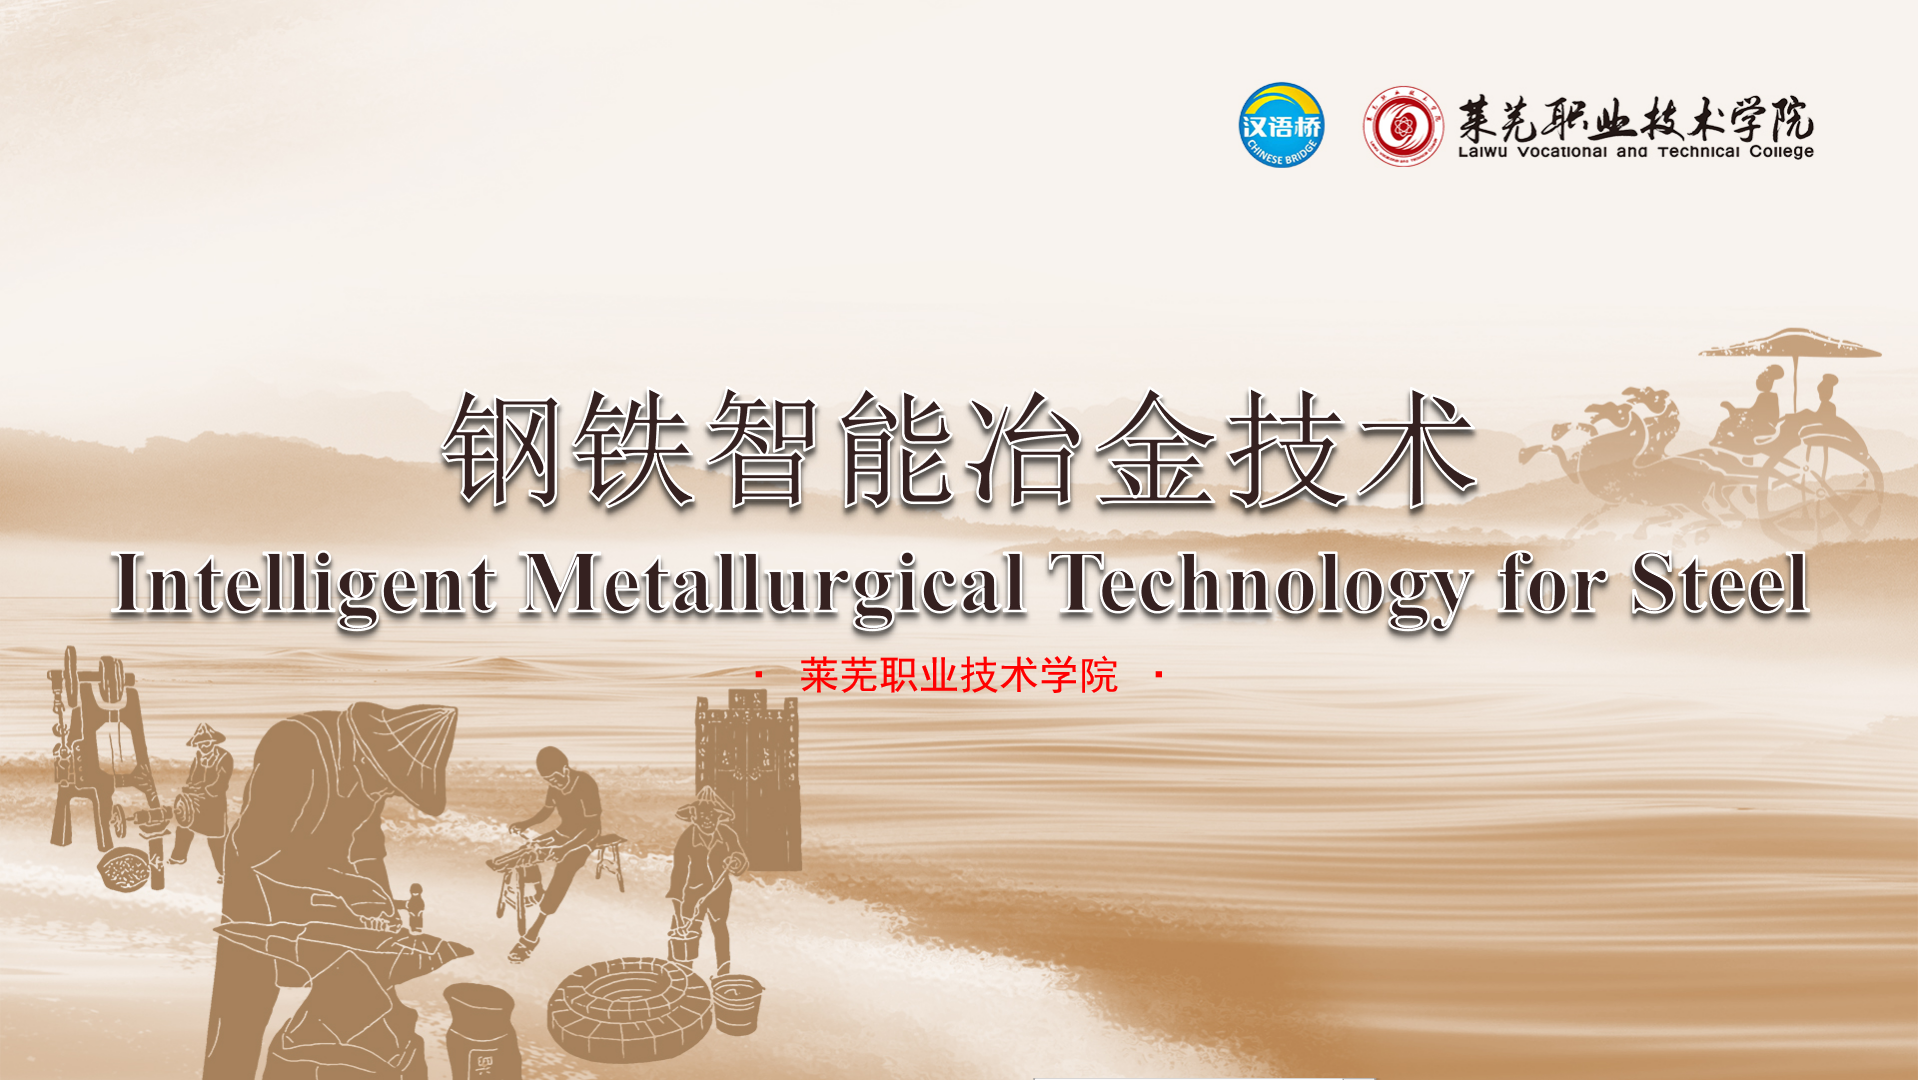 Intelligent Metallurgical Technology for Steel